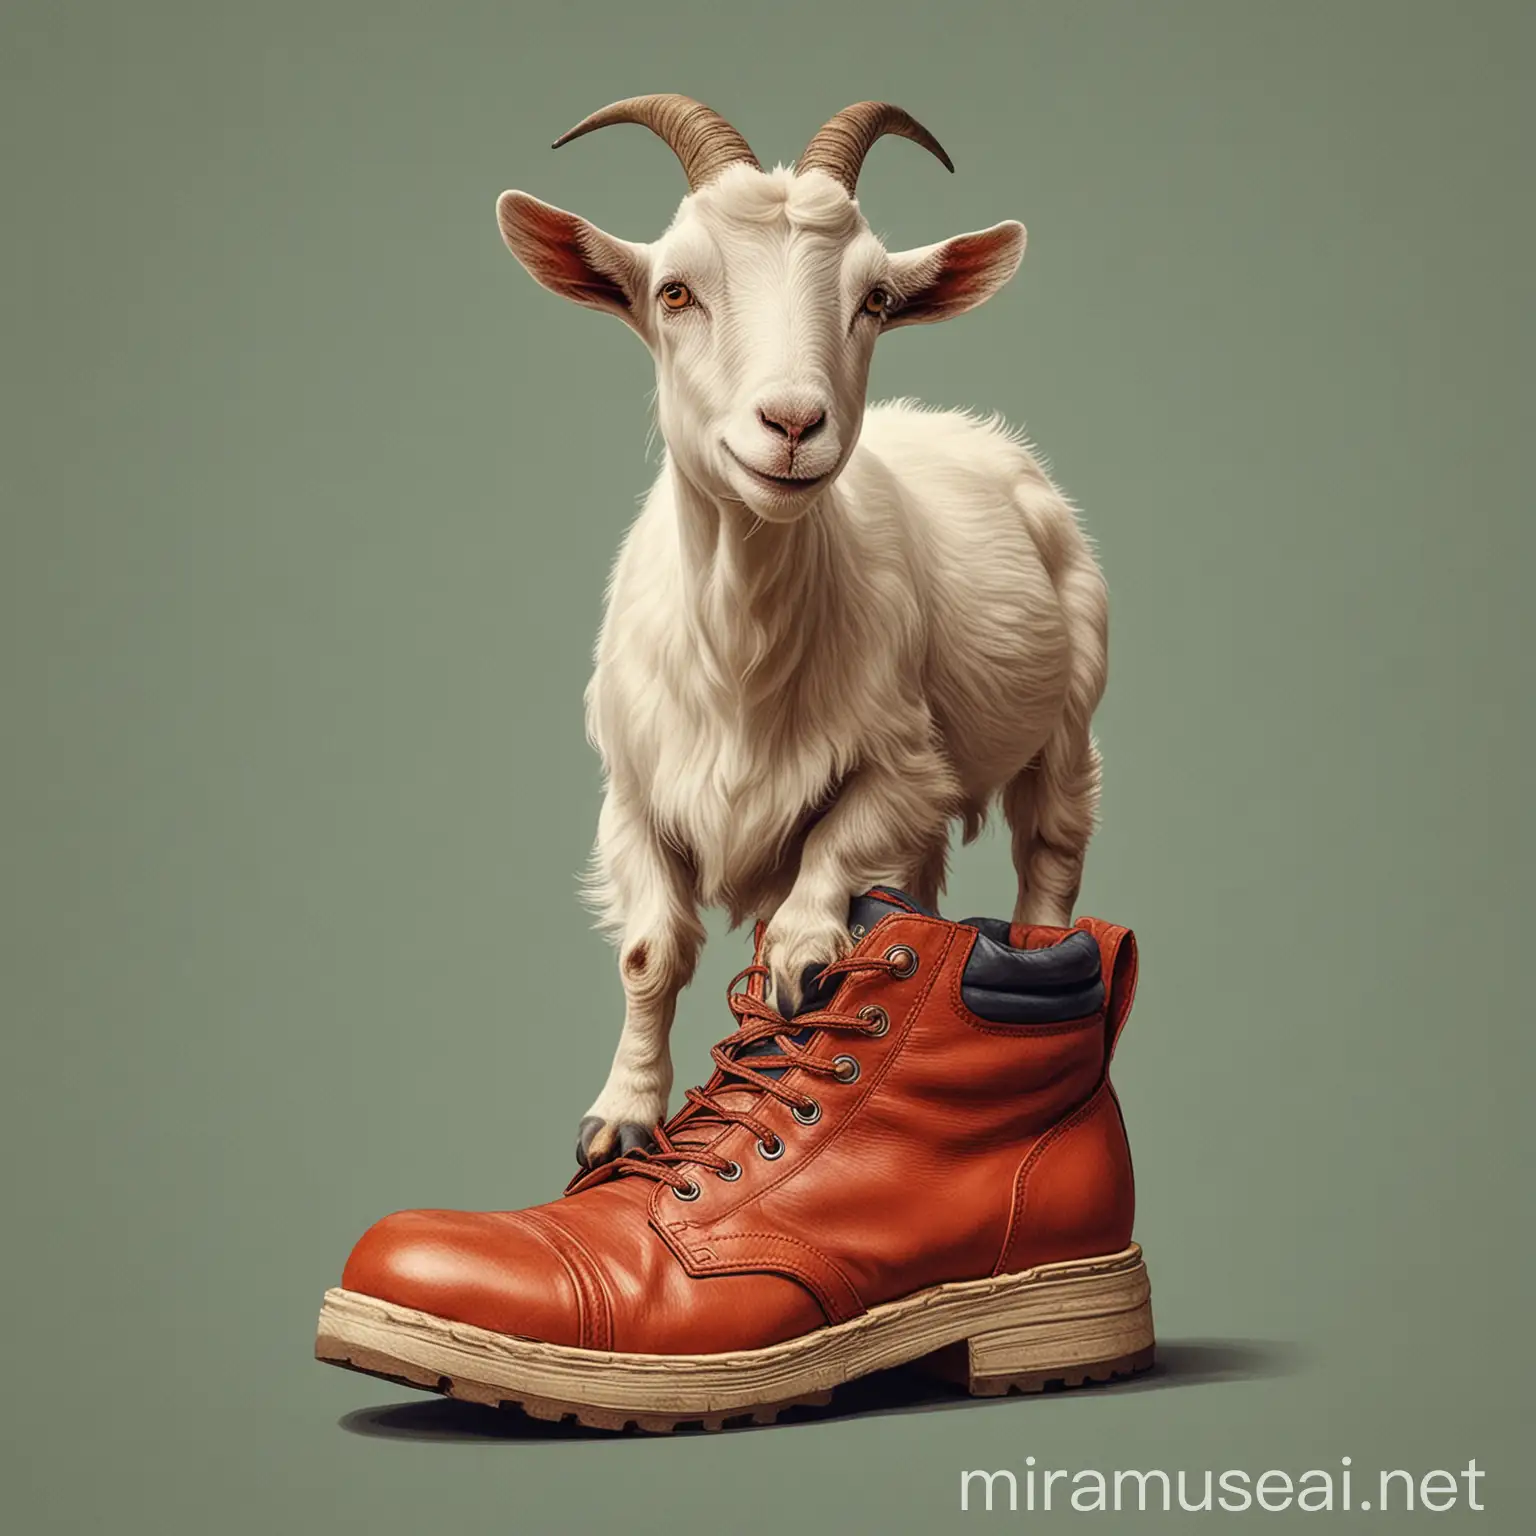 Goat Standing on Shoe Vector Poster Design